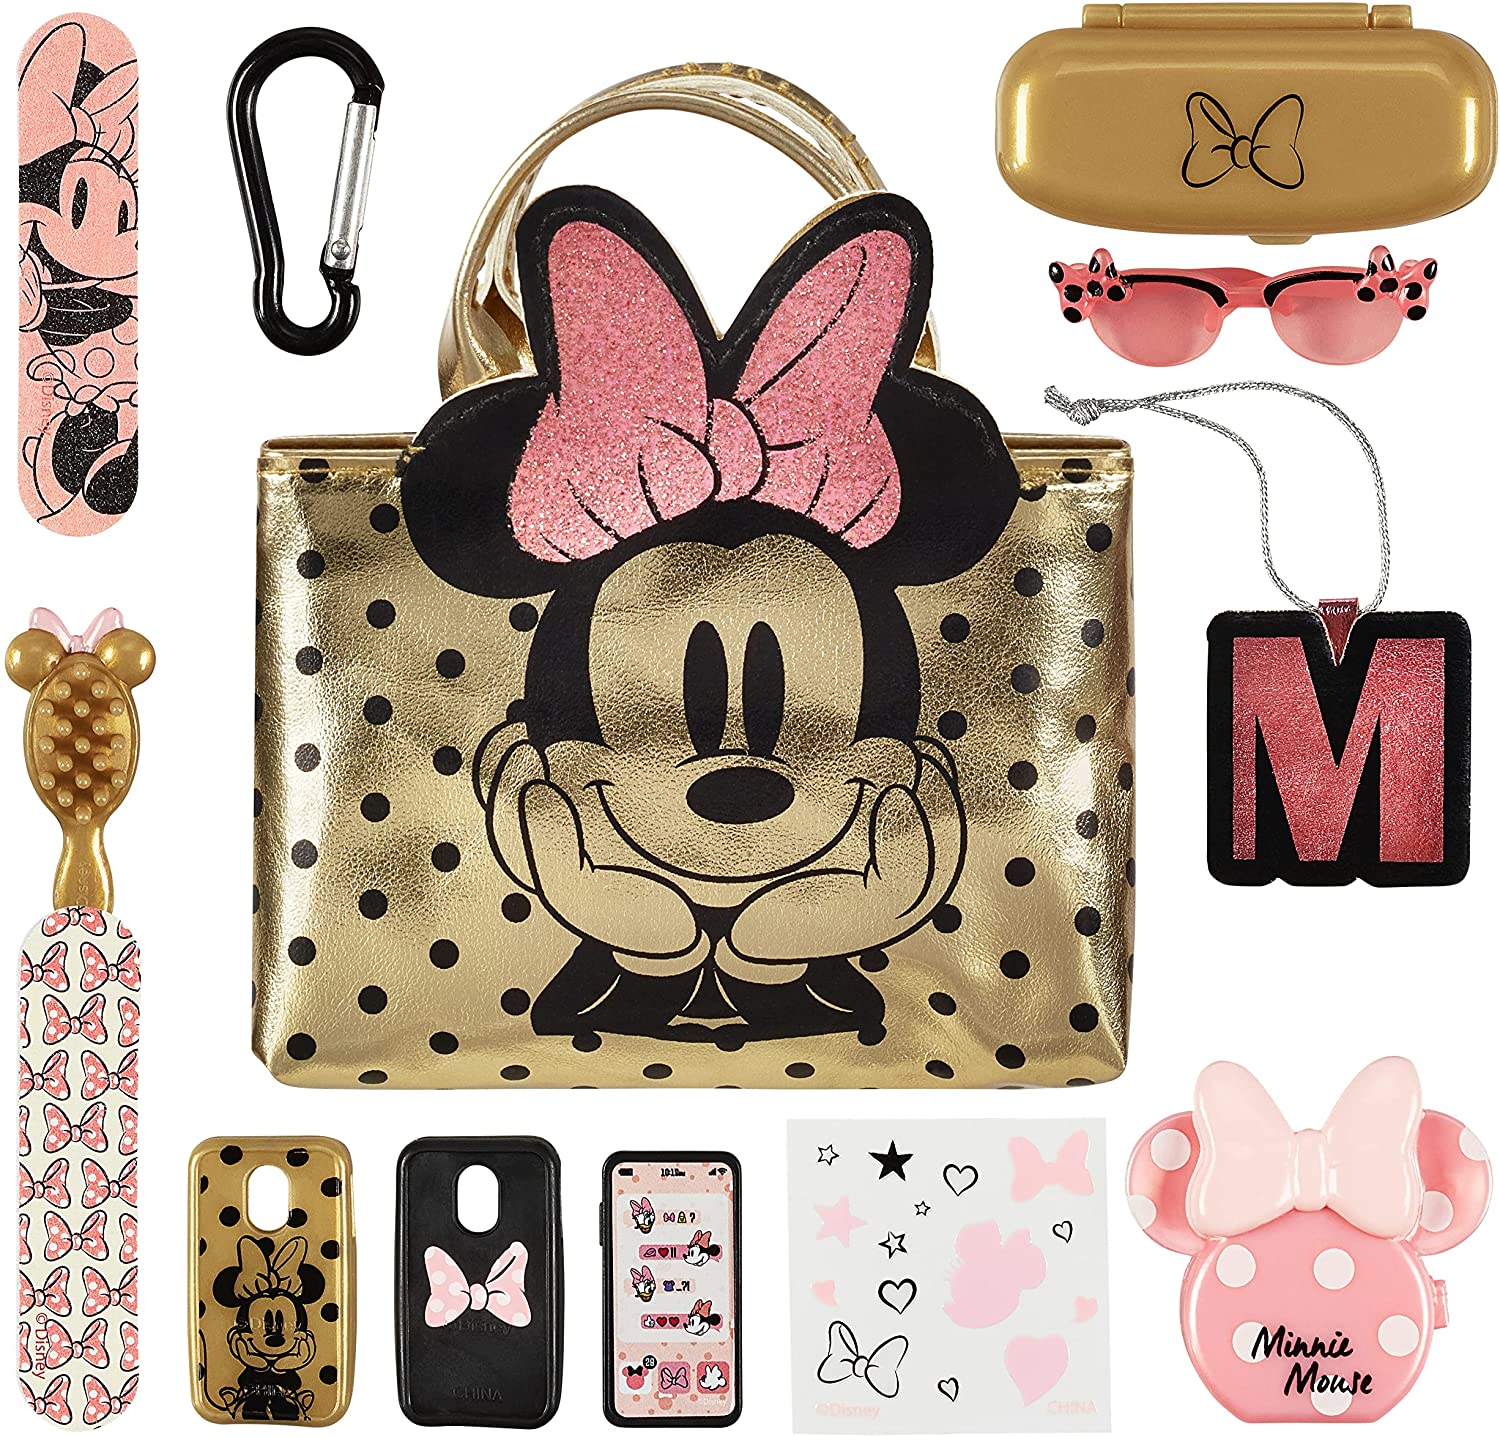 Real Littles Handbags Disney cinderella 